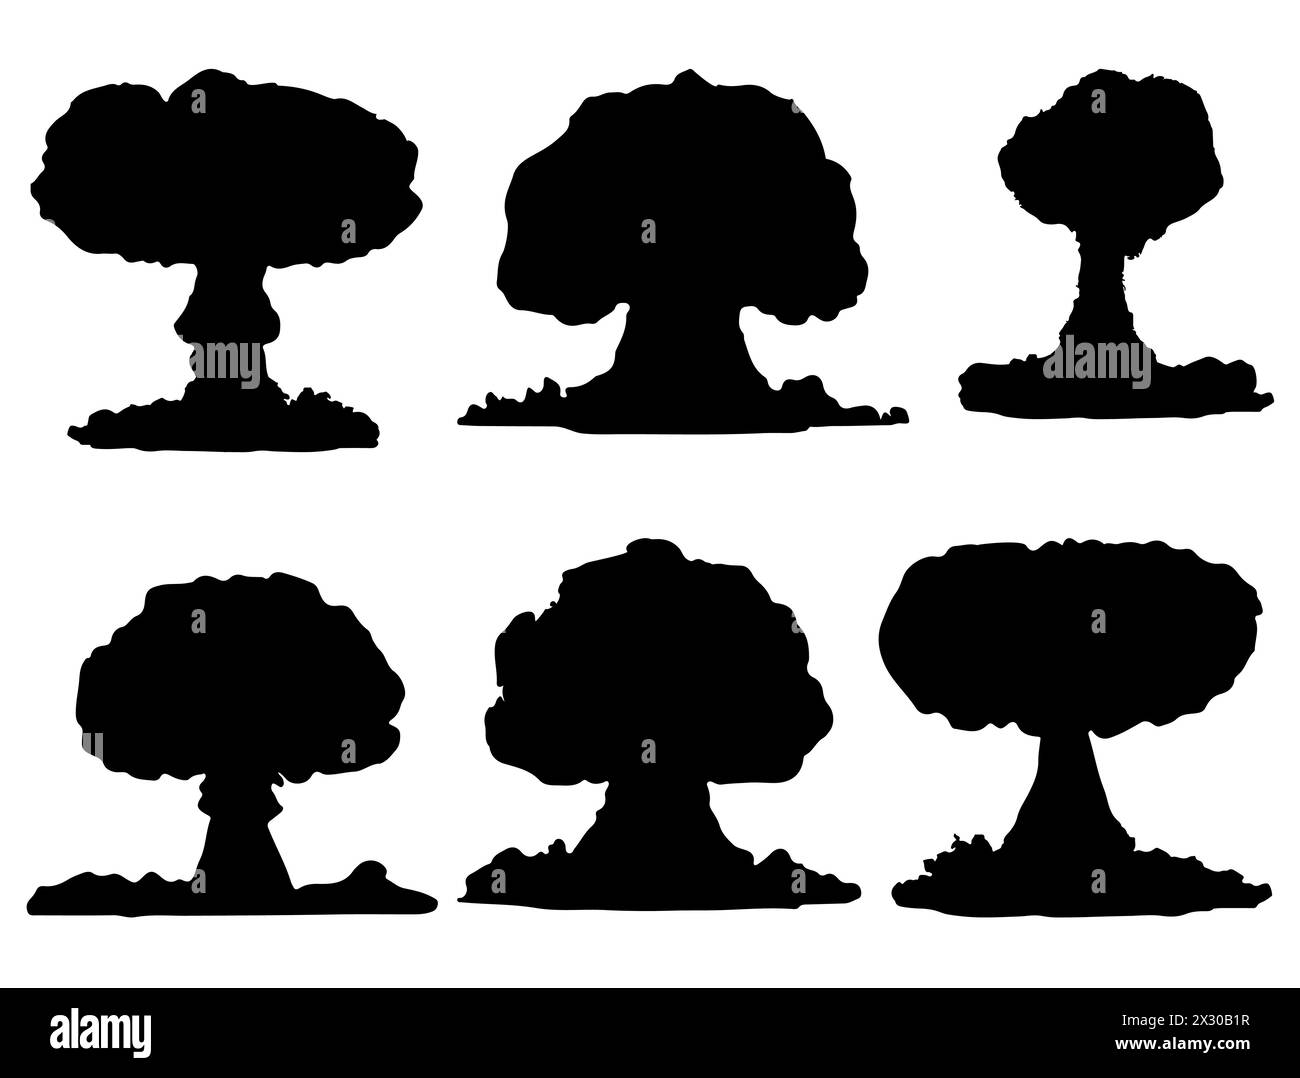 Bomb explosion silhouette vector art Stock Vector